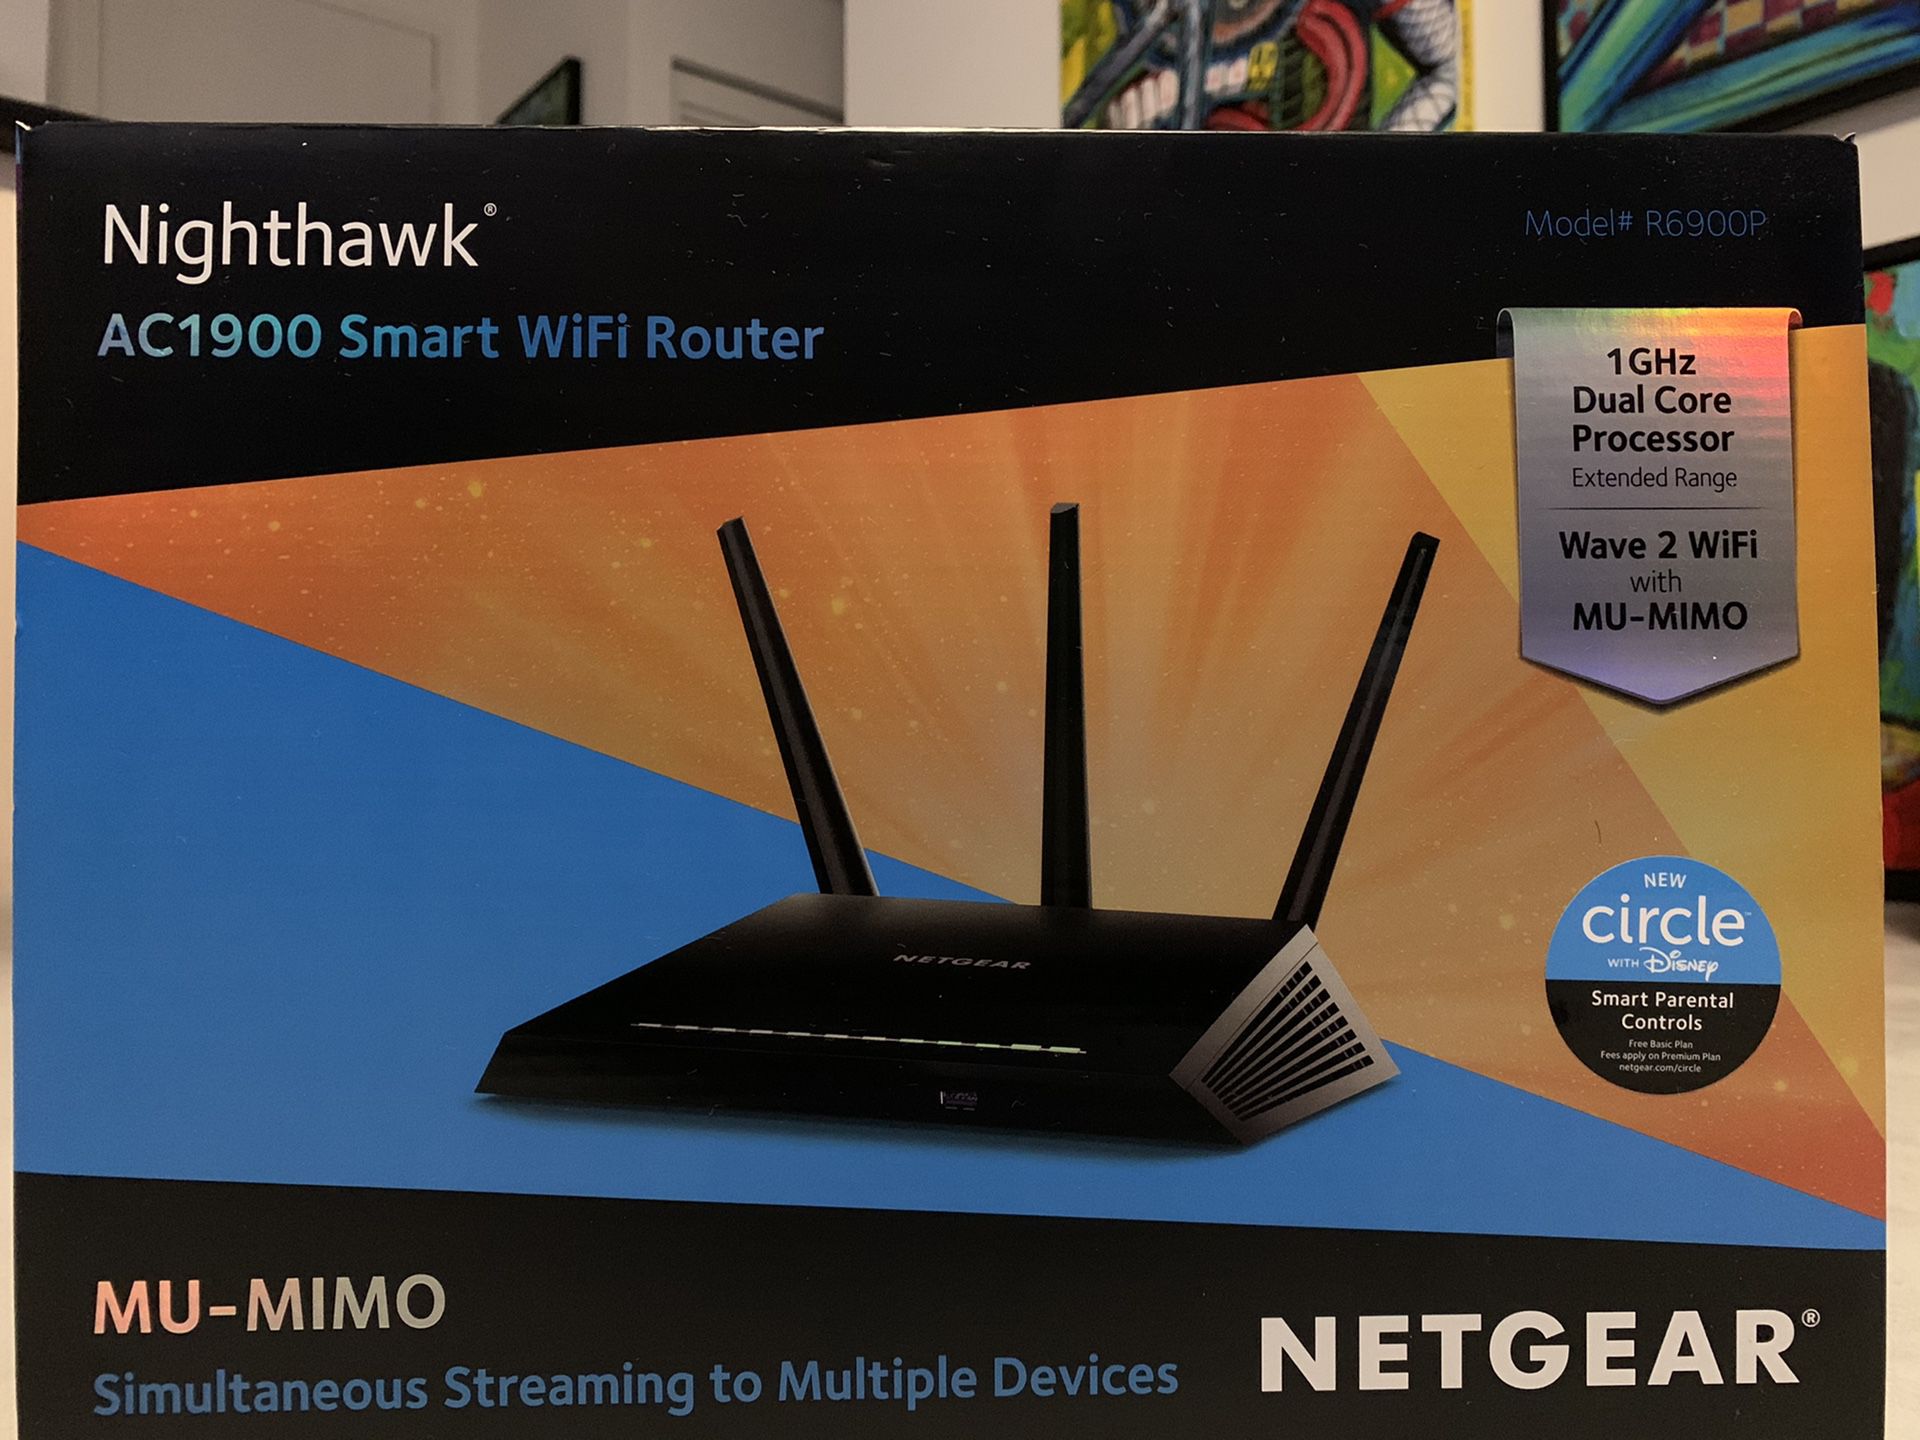 NETGEAR NIGHTHAWK Wireless Home Router R6900P AC1900